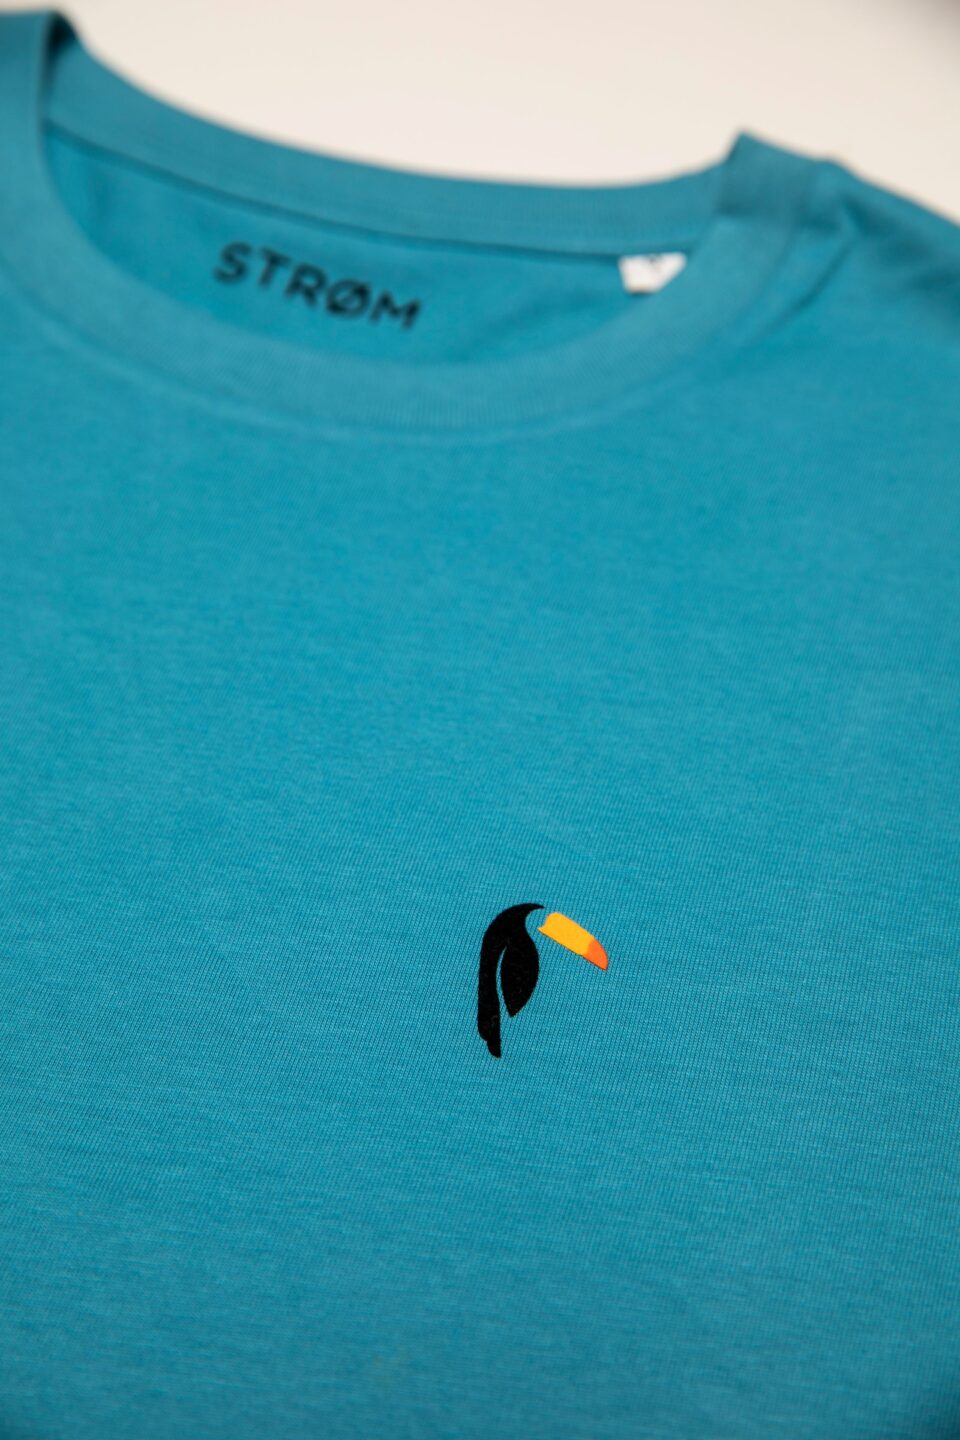 Pacific-blue-t-shirt-tucan